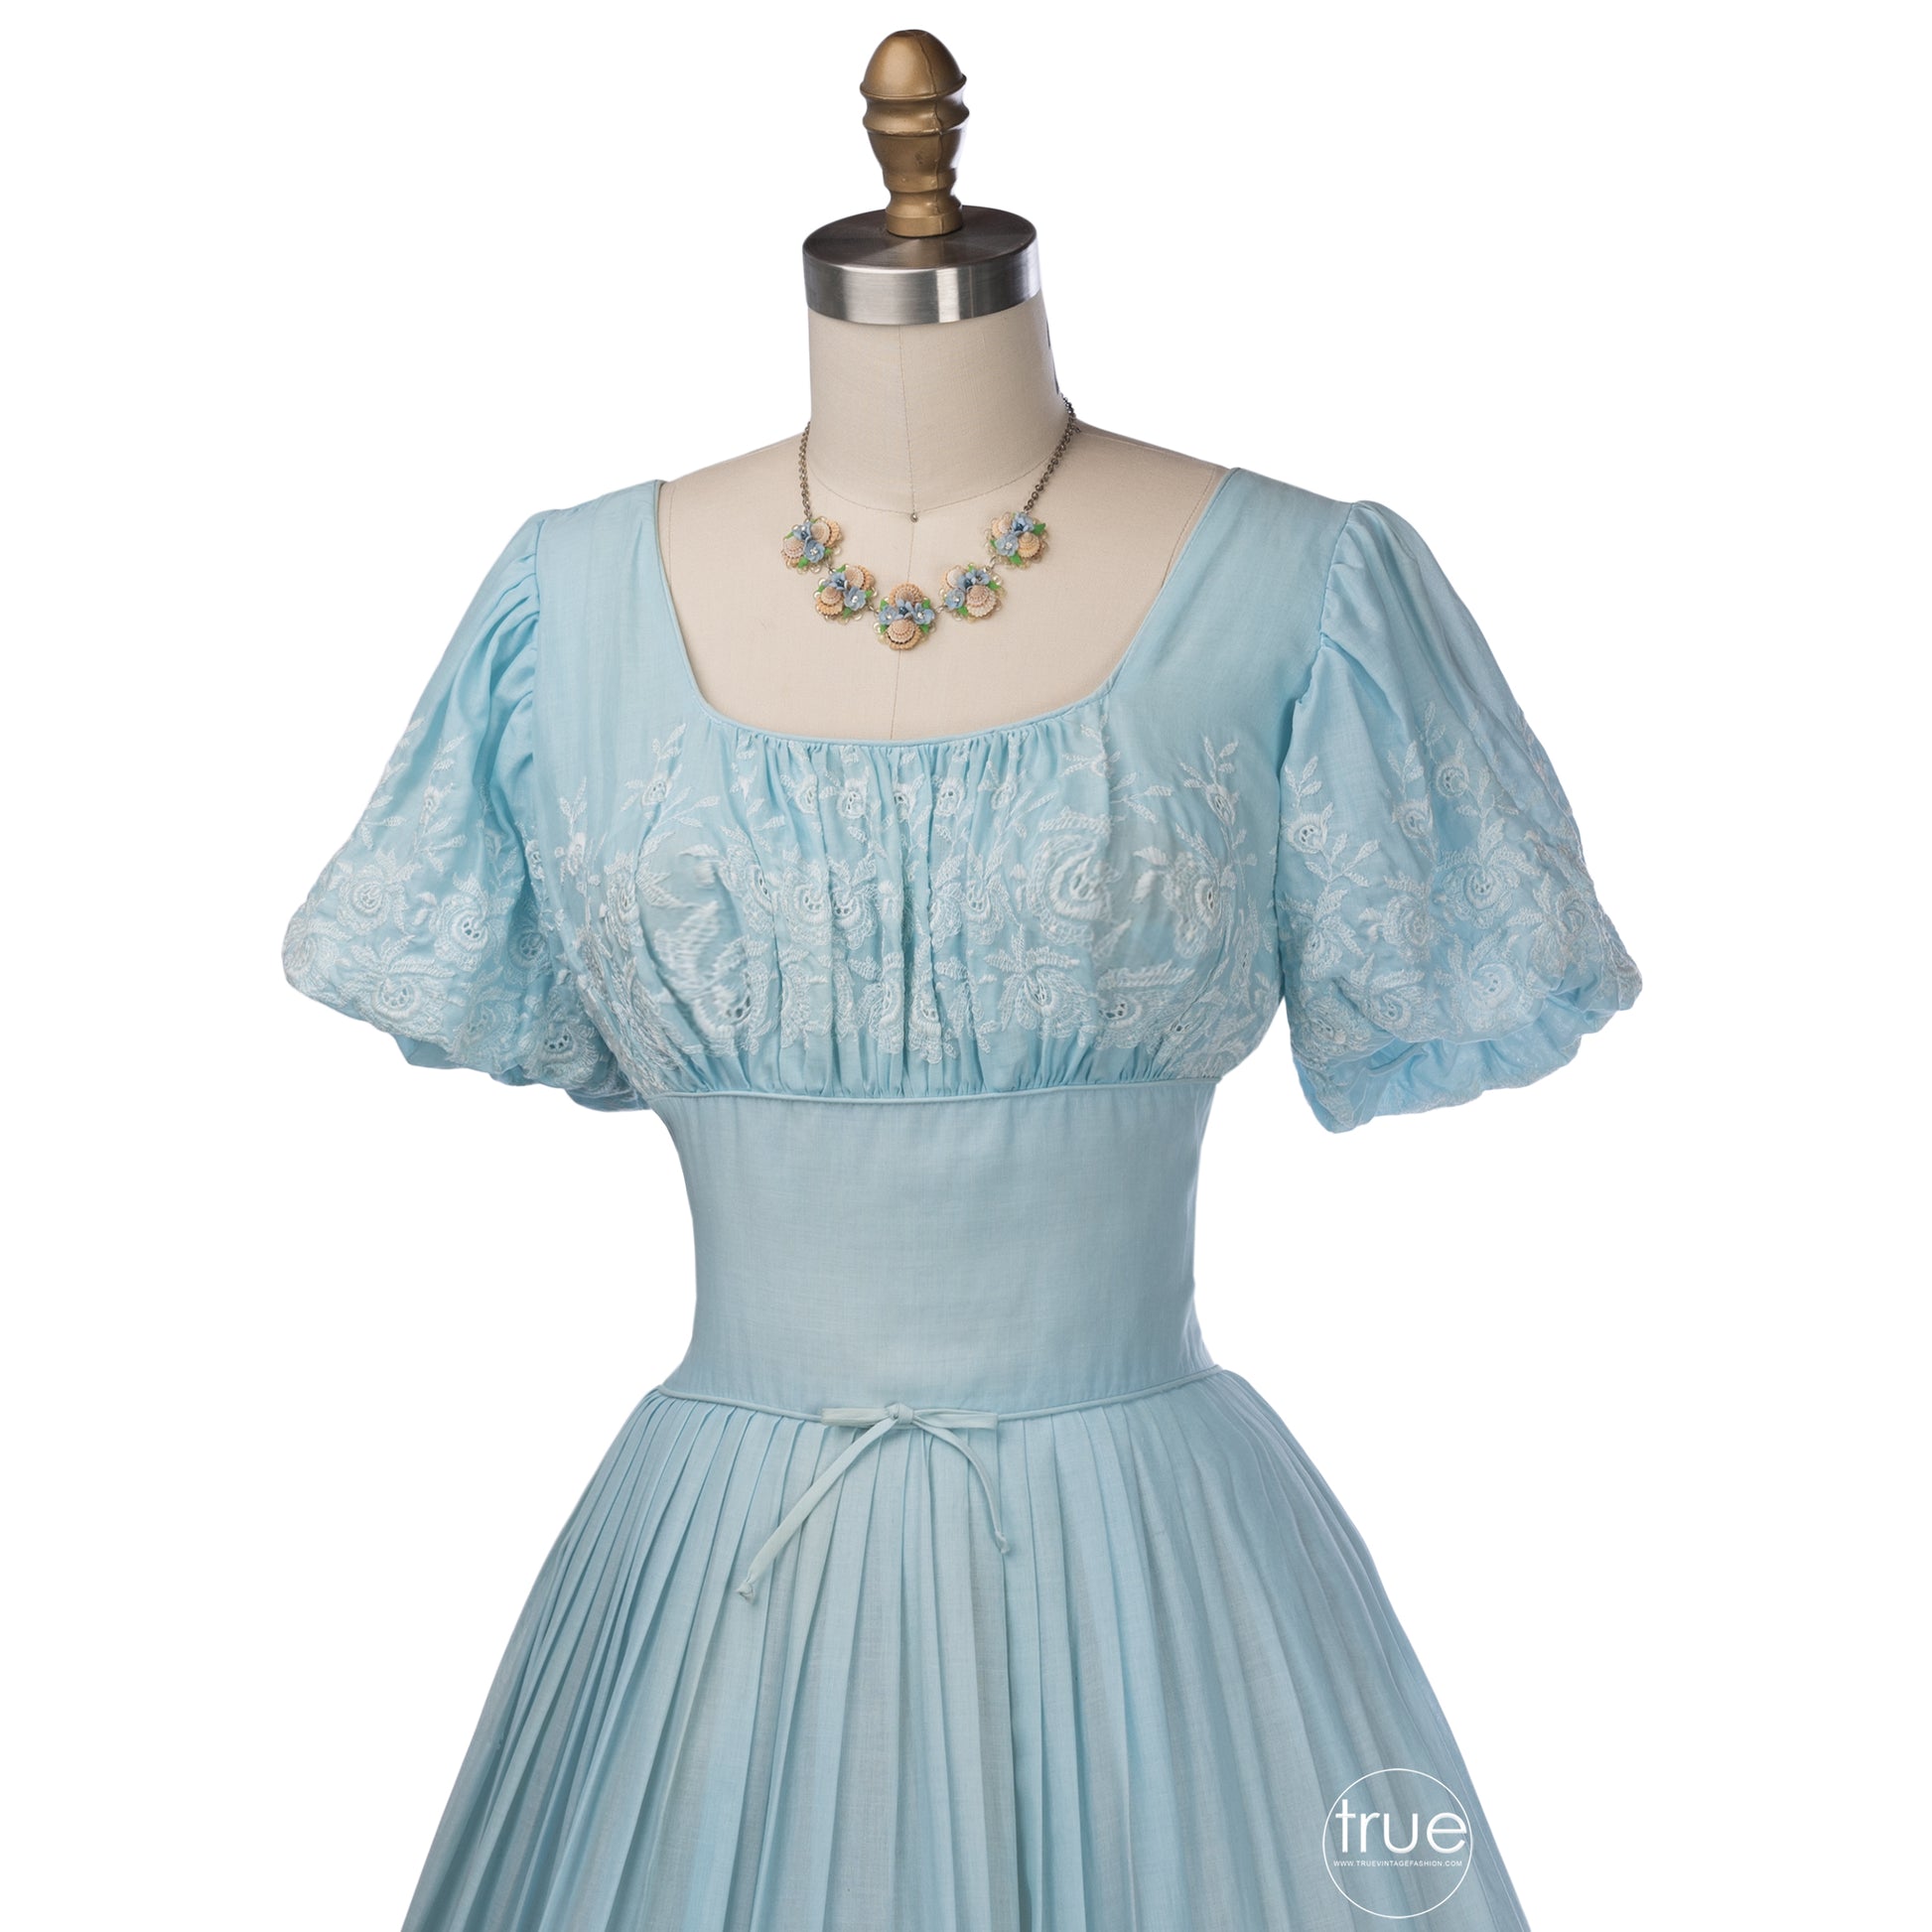 1950's dress